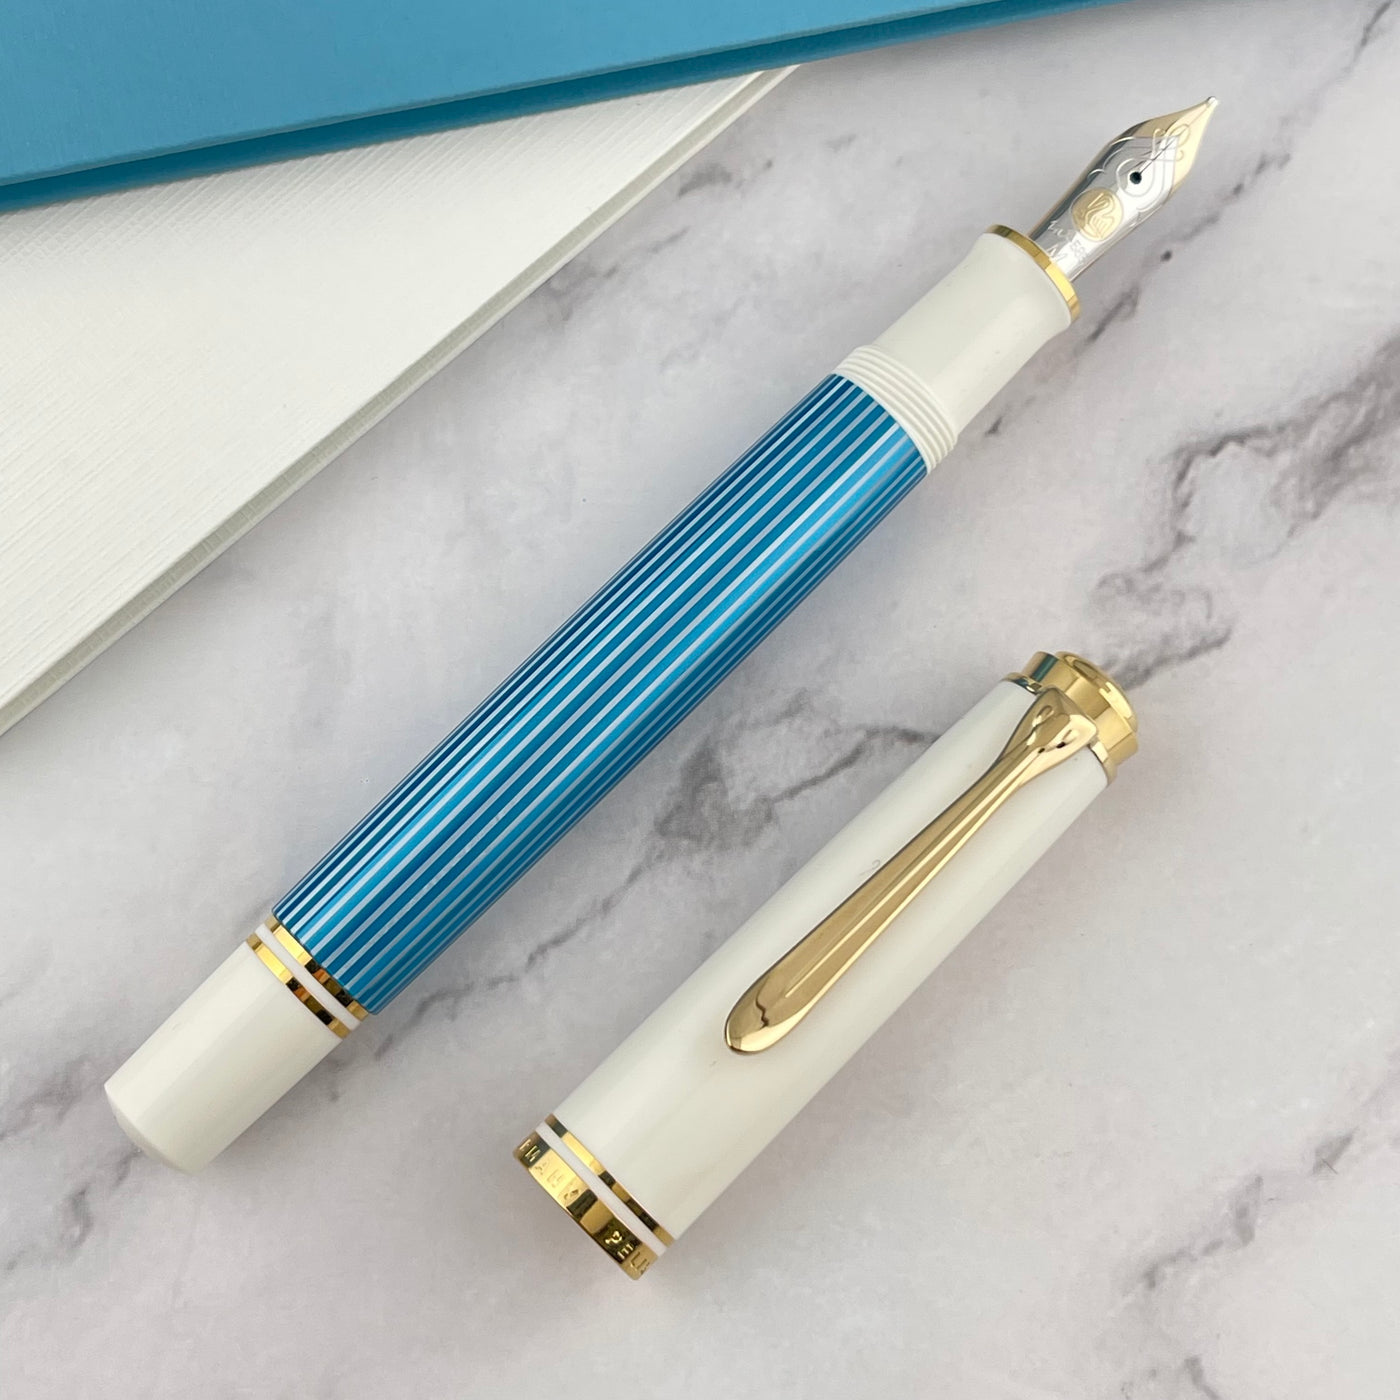 Pelikan Souveran M600 Fountain pen - Turquoise / White (Special Edition) (Pre-order)